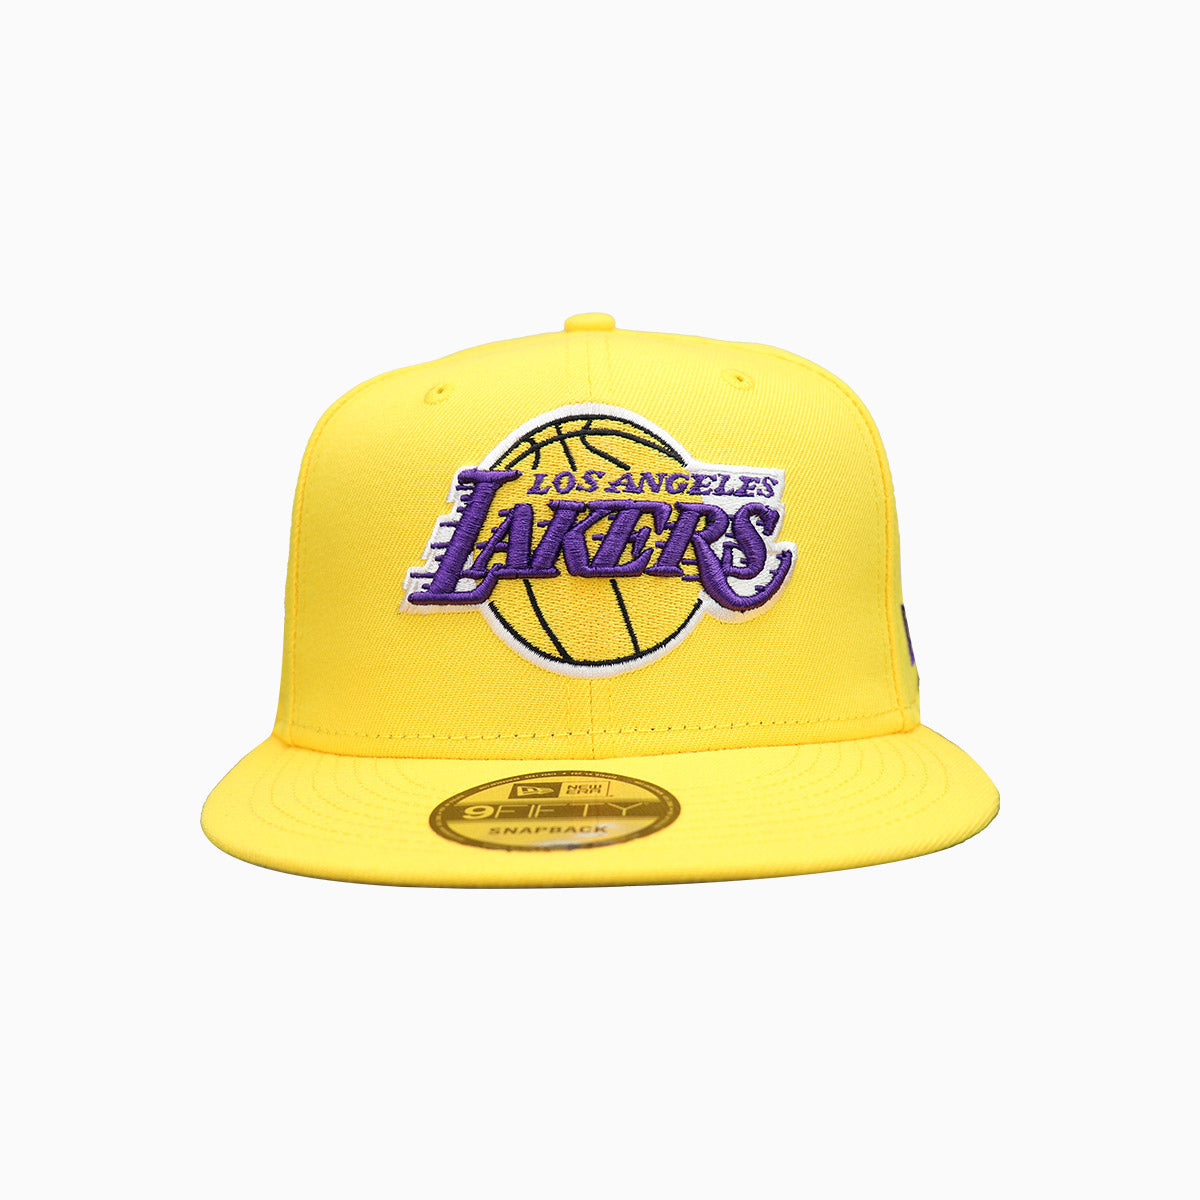 Los Angeles Lakers Adidas Womens Adjustable NBA Cap Hat Yellow NEW